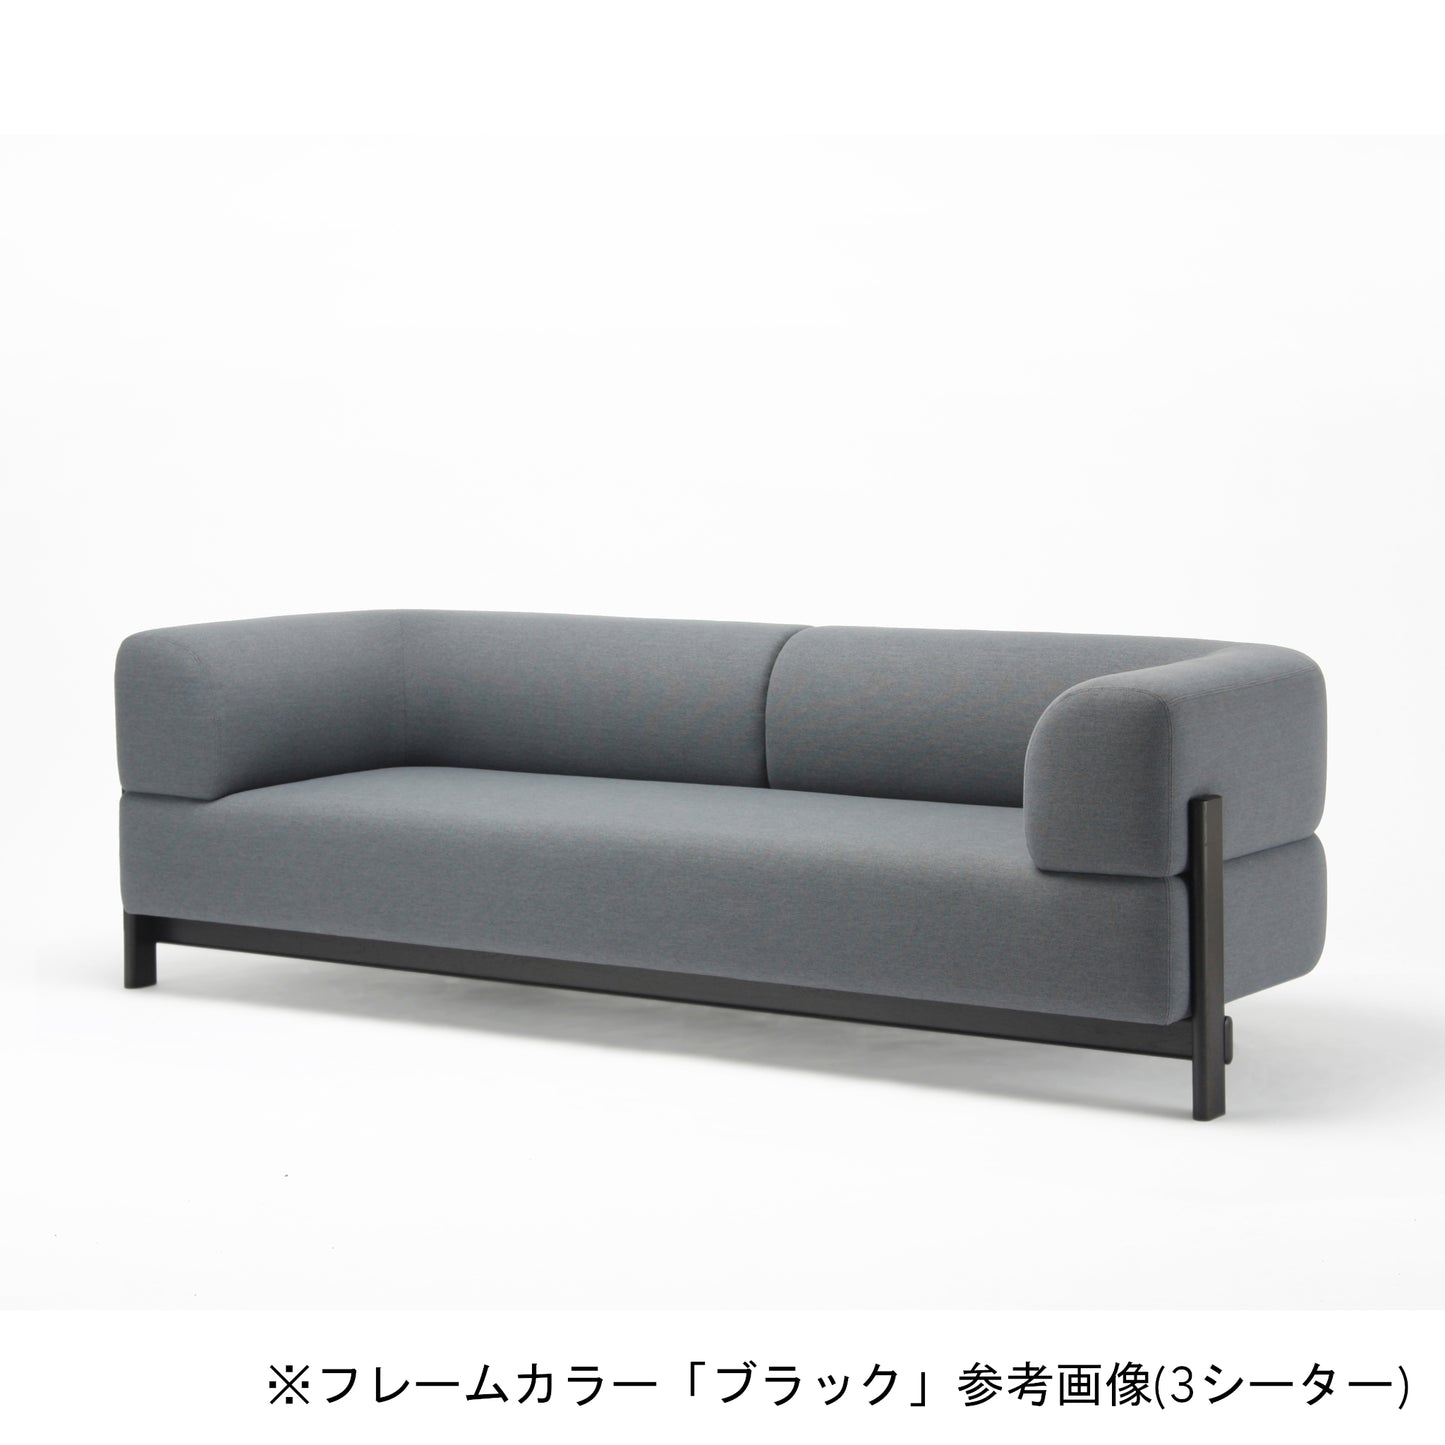 Elephant Sofa 2-Seater | エレファントソファ 2シーター